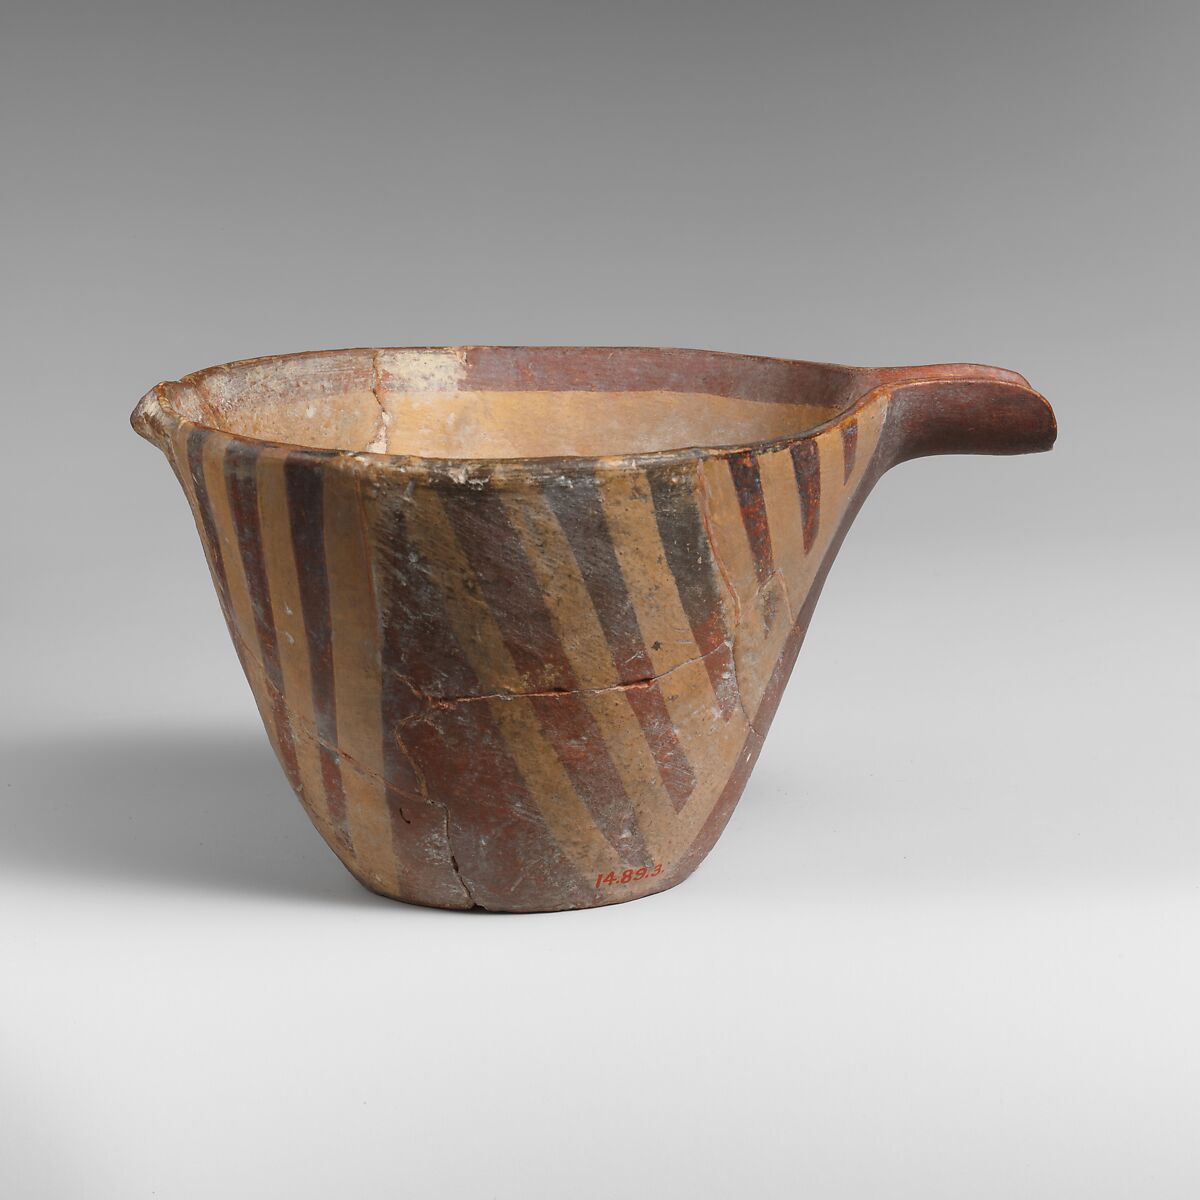 Terracotta spouted conical bowl, white-on-dark ware, Terracotta, Minoan 